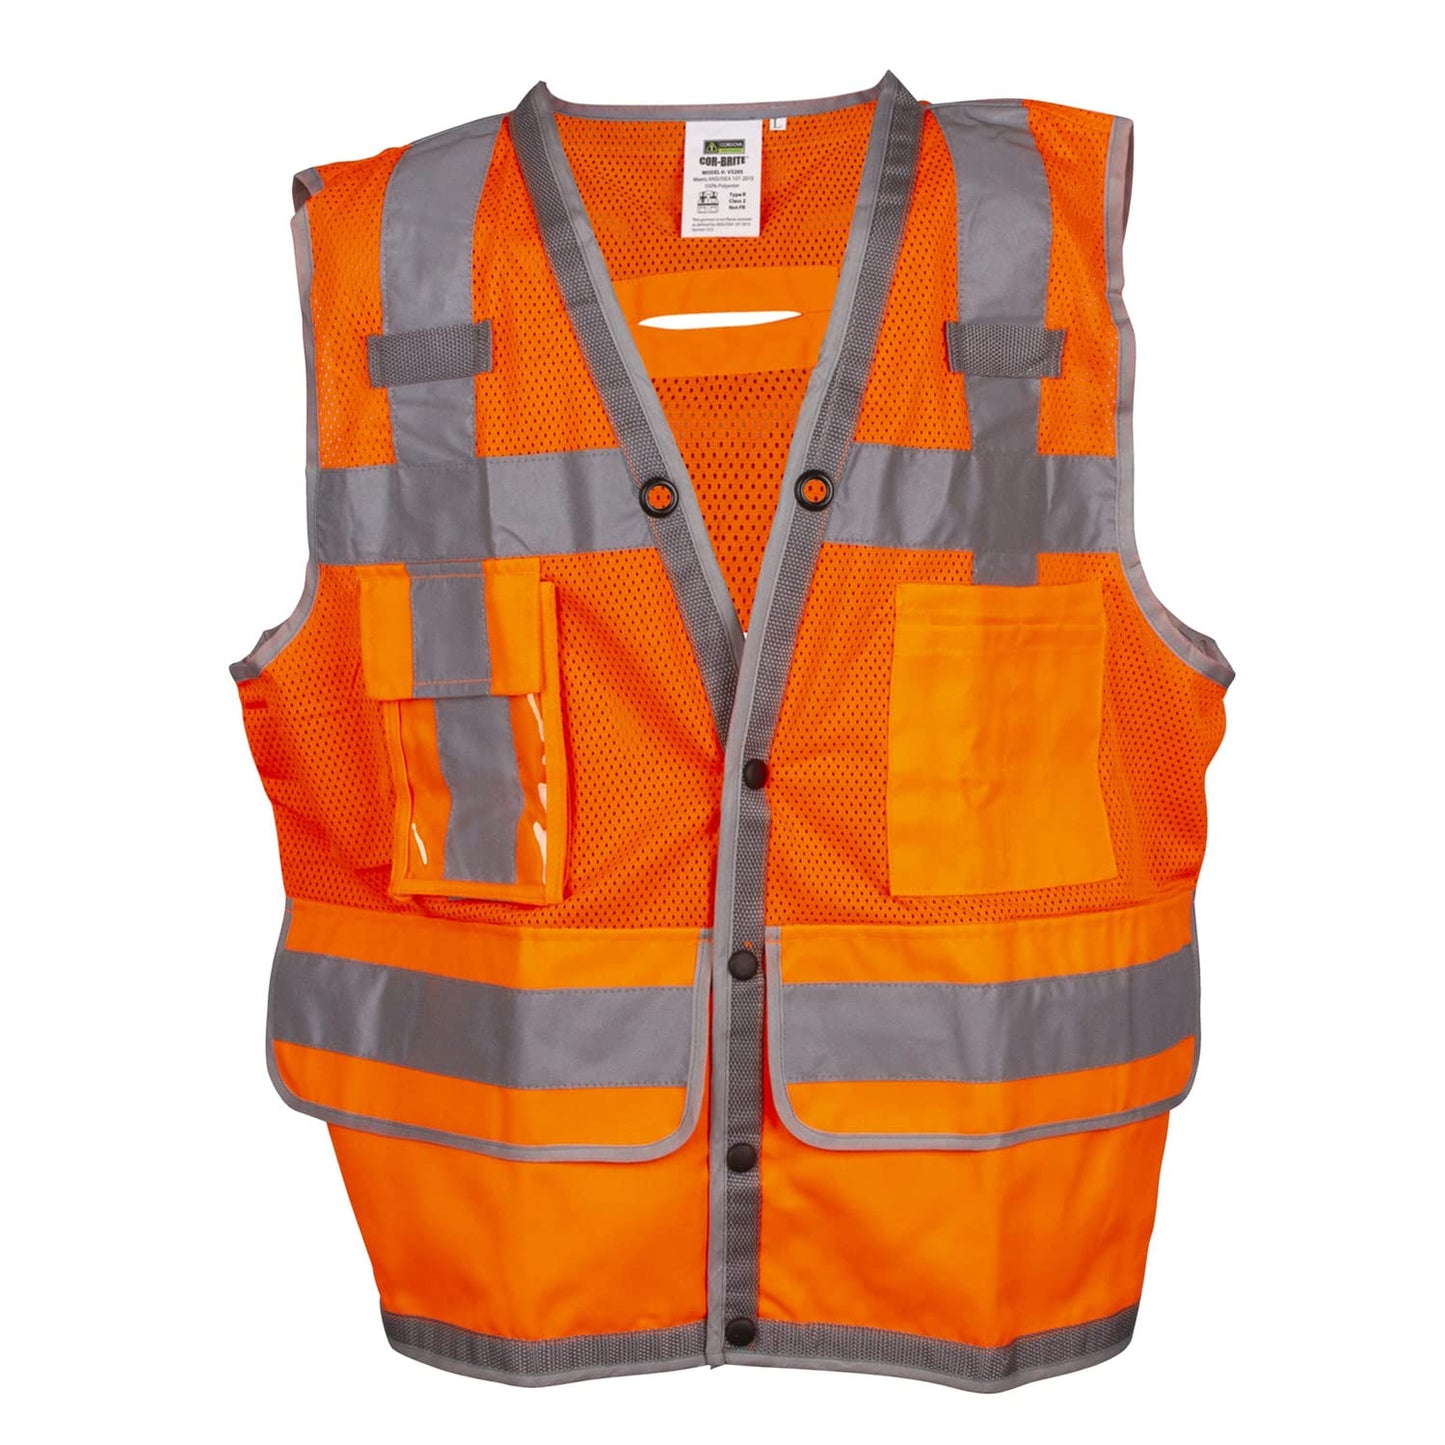 Type R, Class 2, Heavy Duty Surveyor's Safety Vest, High-Visibility